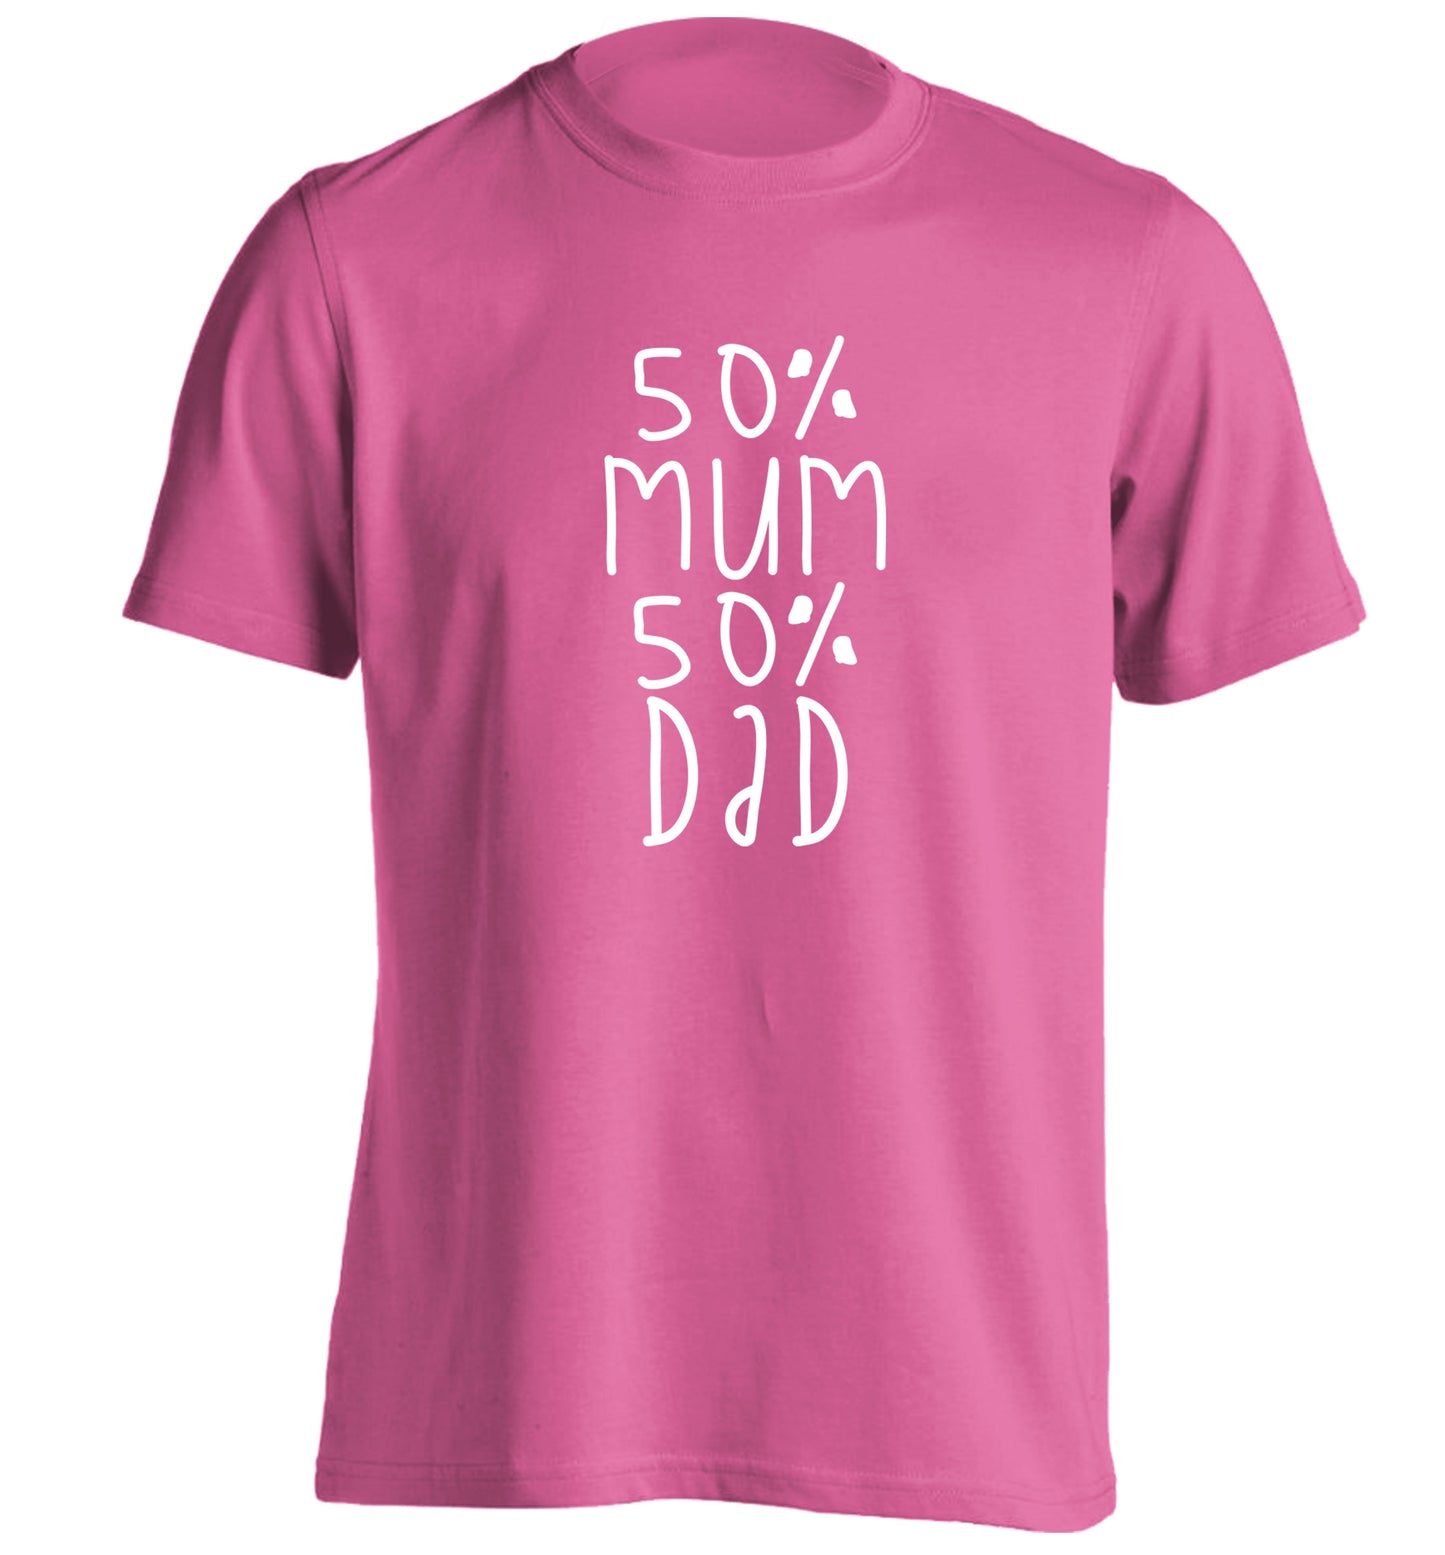 50% mum 50% dad adults unisex pink Tshirt 2XL